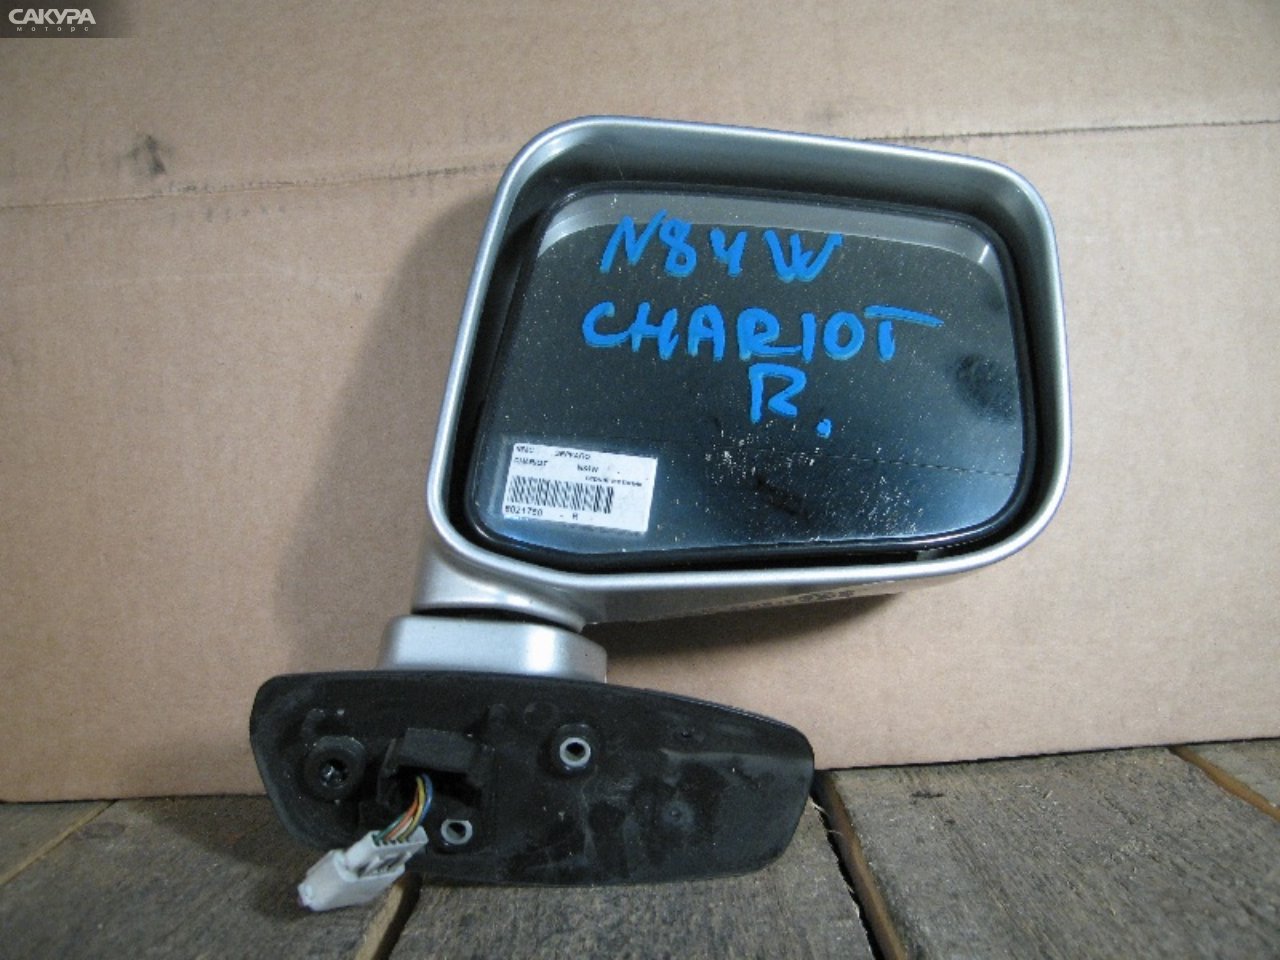 Зеркало боковое правое Mitsubishi Chariot Grandis N84W: купить в Сакура Абакан.